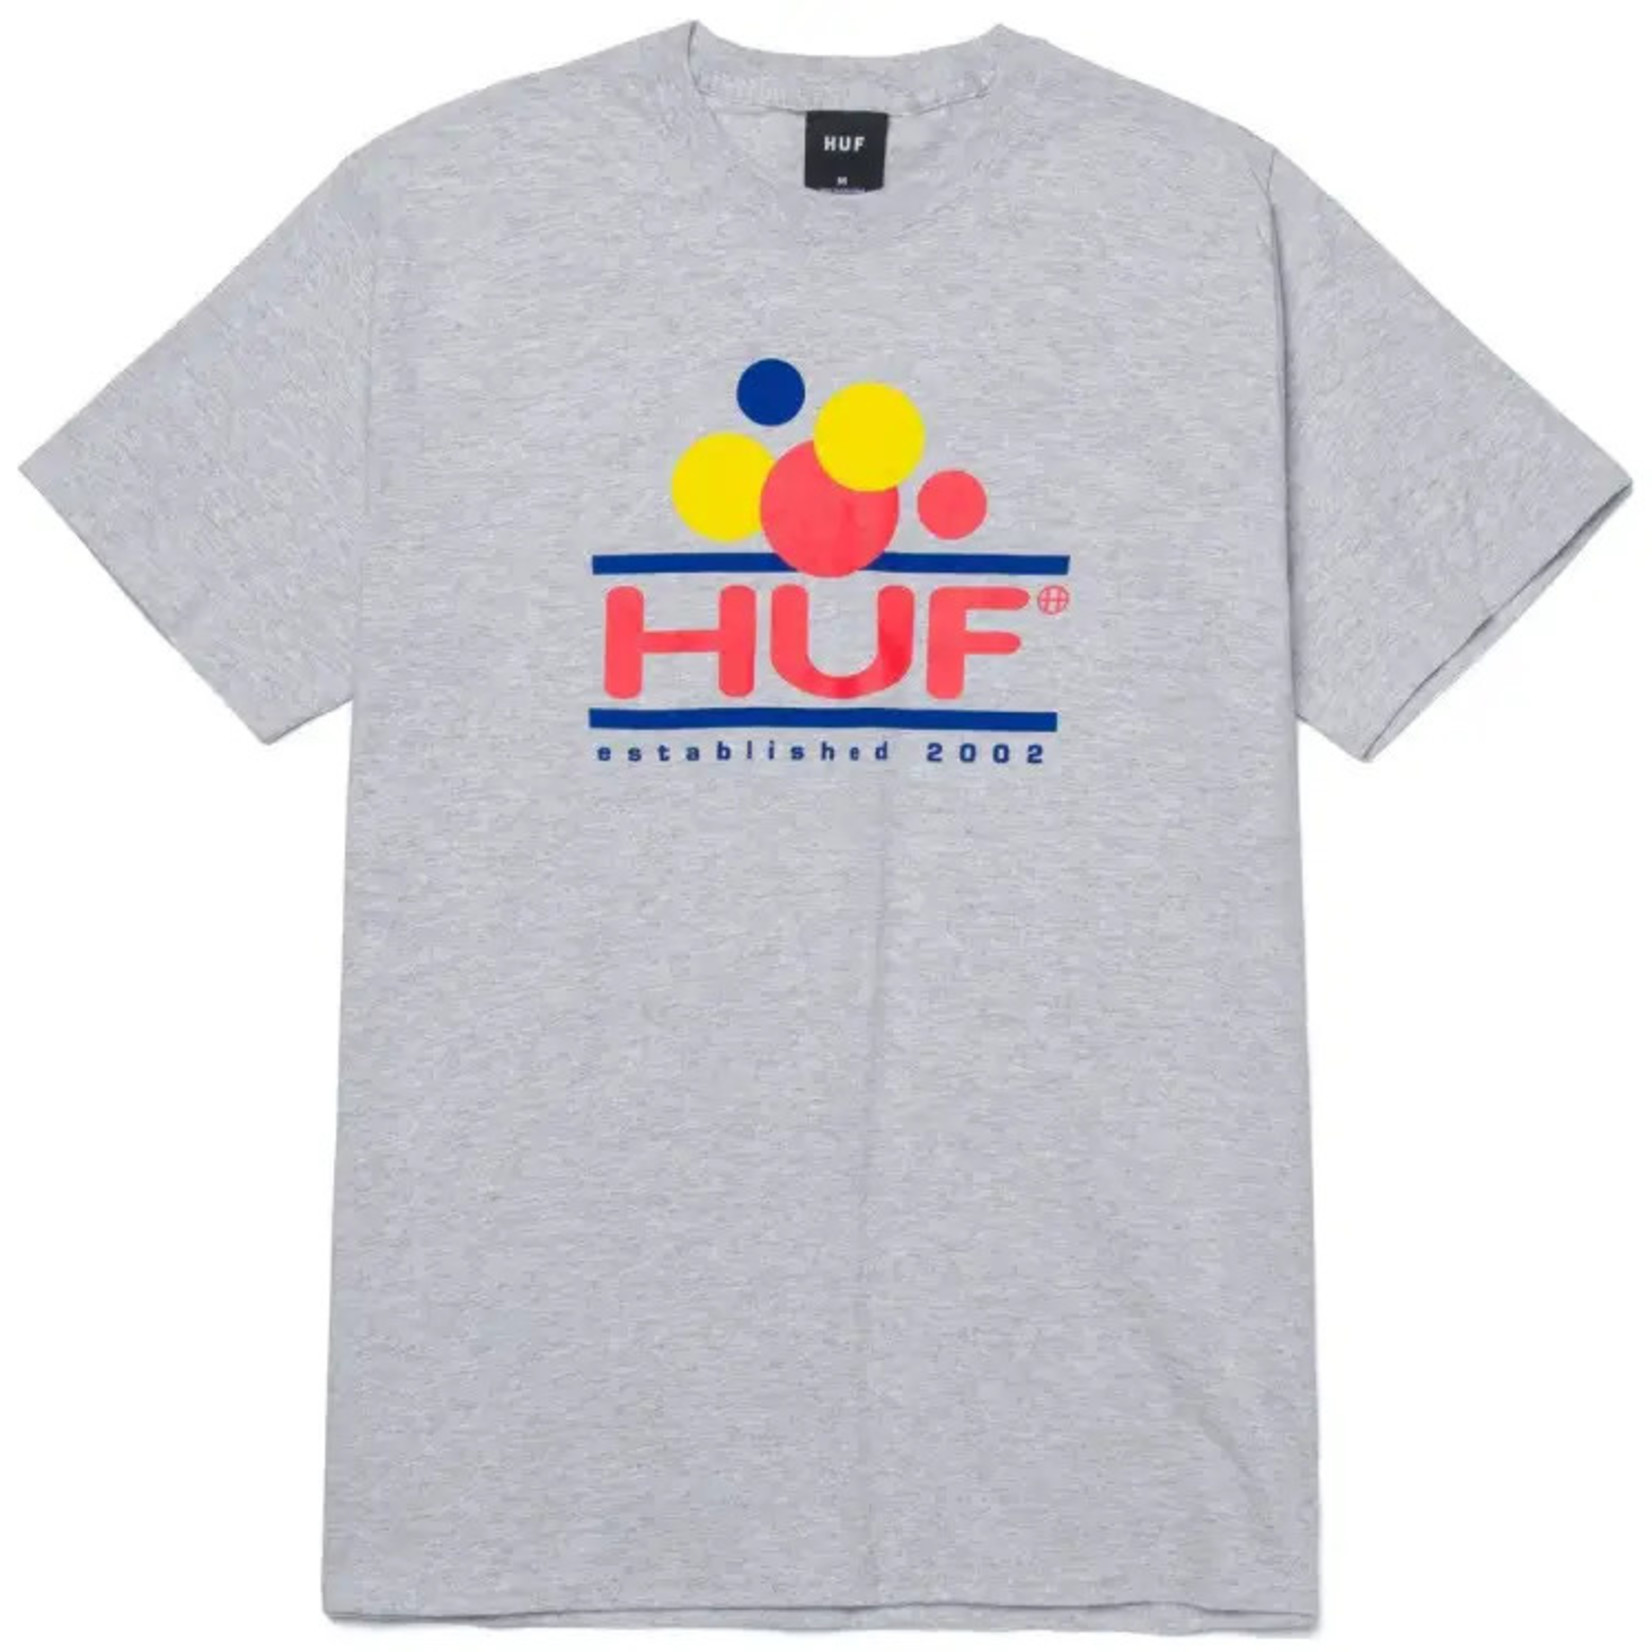 Huf Huf Worldwide Fun T-Shirt - Athletic Grey